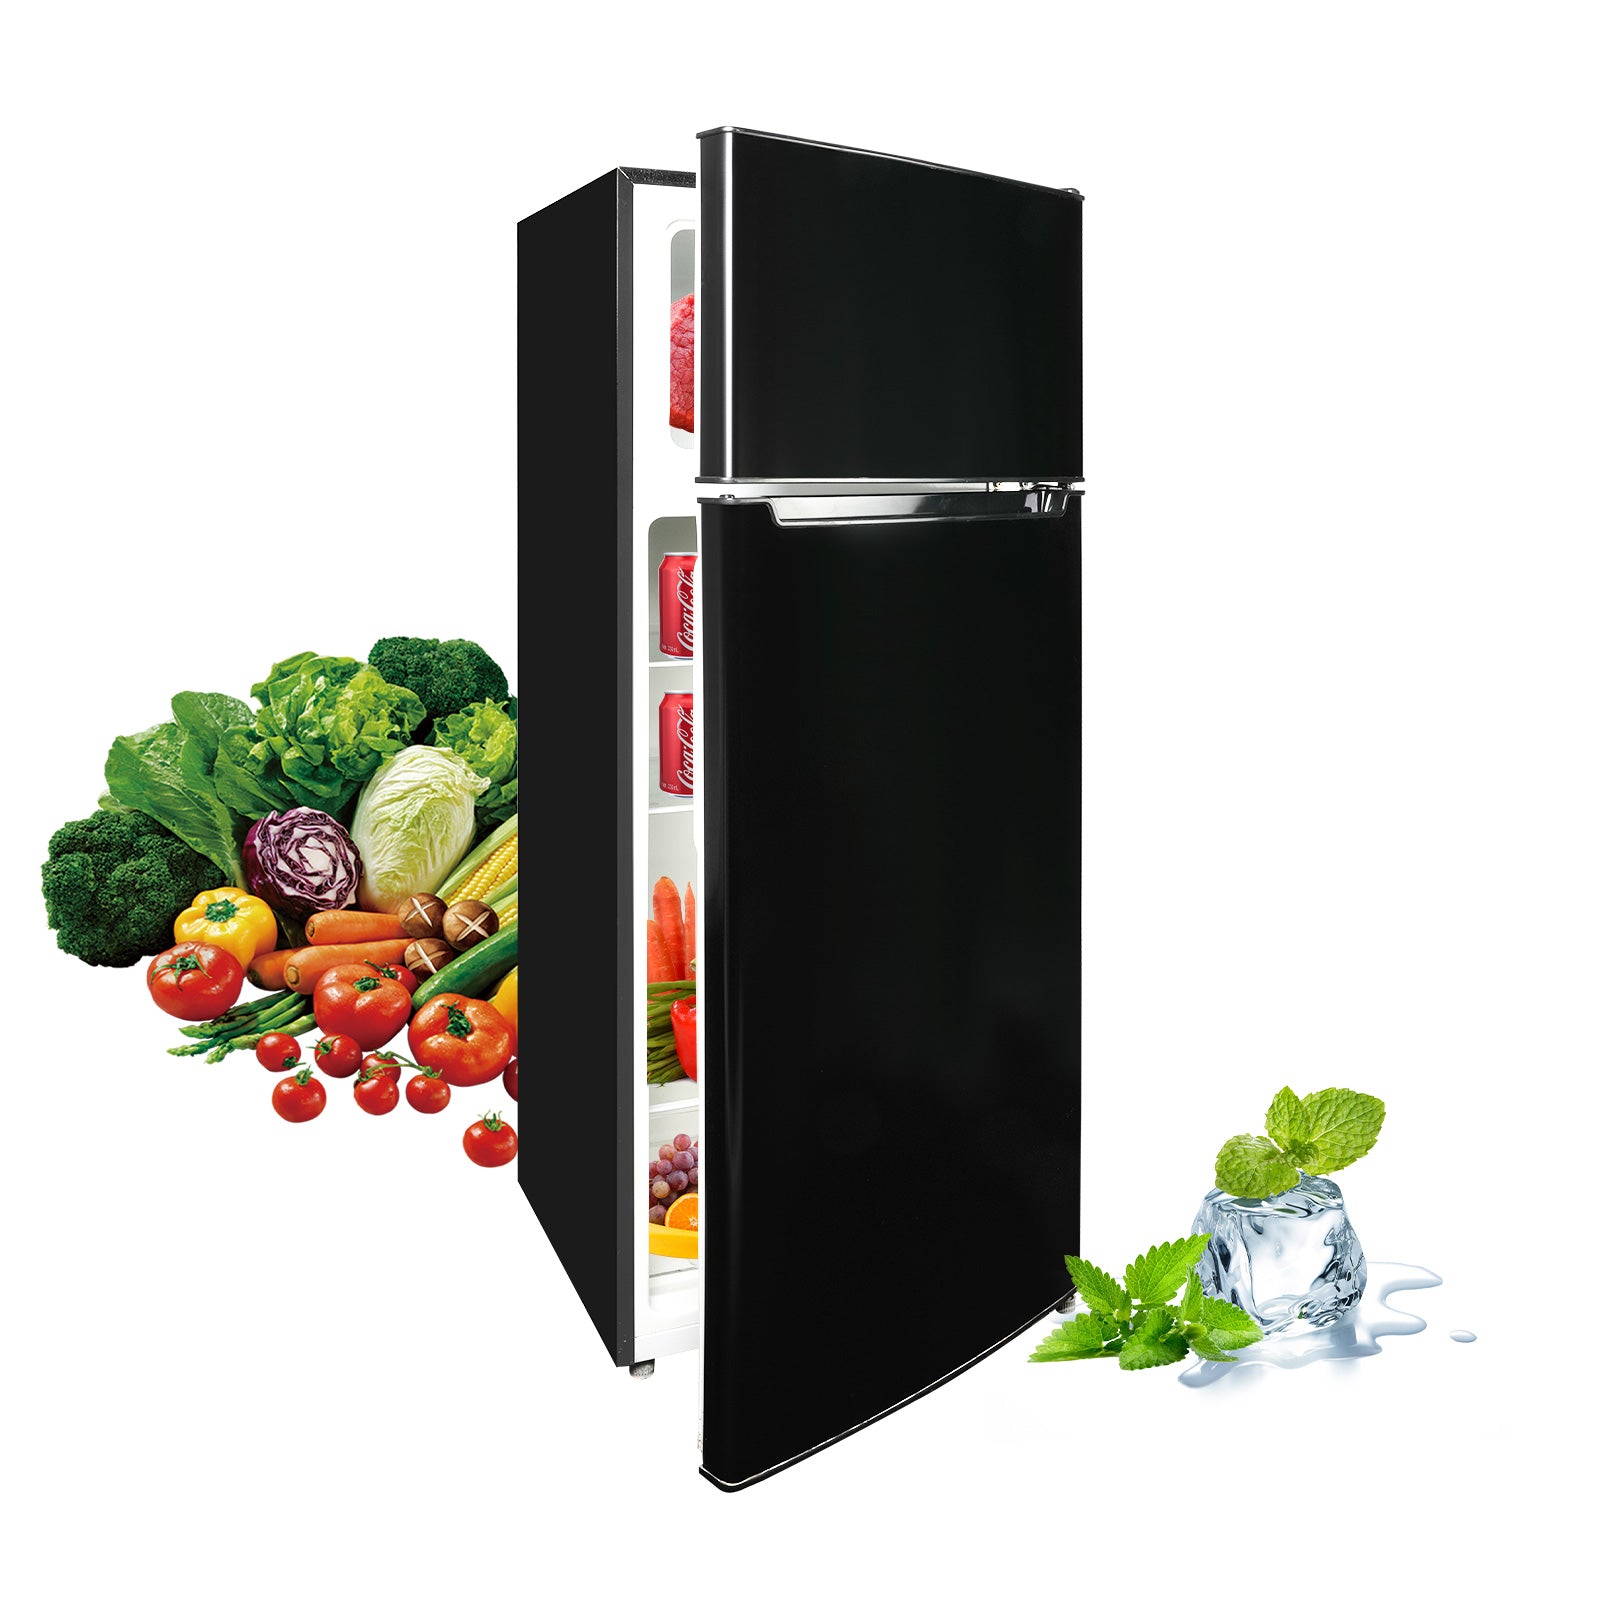 7.7 Cu Ft Mini Fridge with Freezer, Double Door Apartment Size Refrigerator for Bedroom Office or Dorm, Black